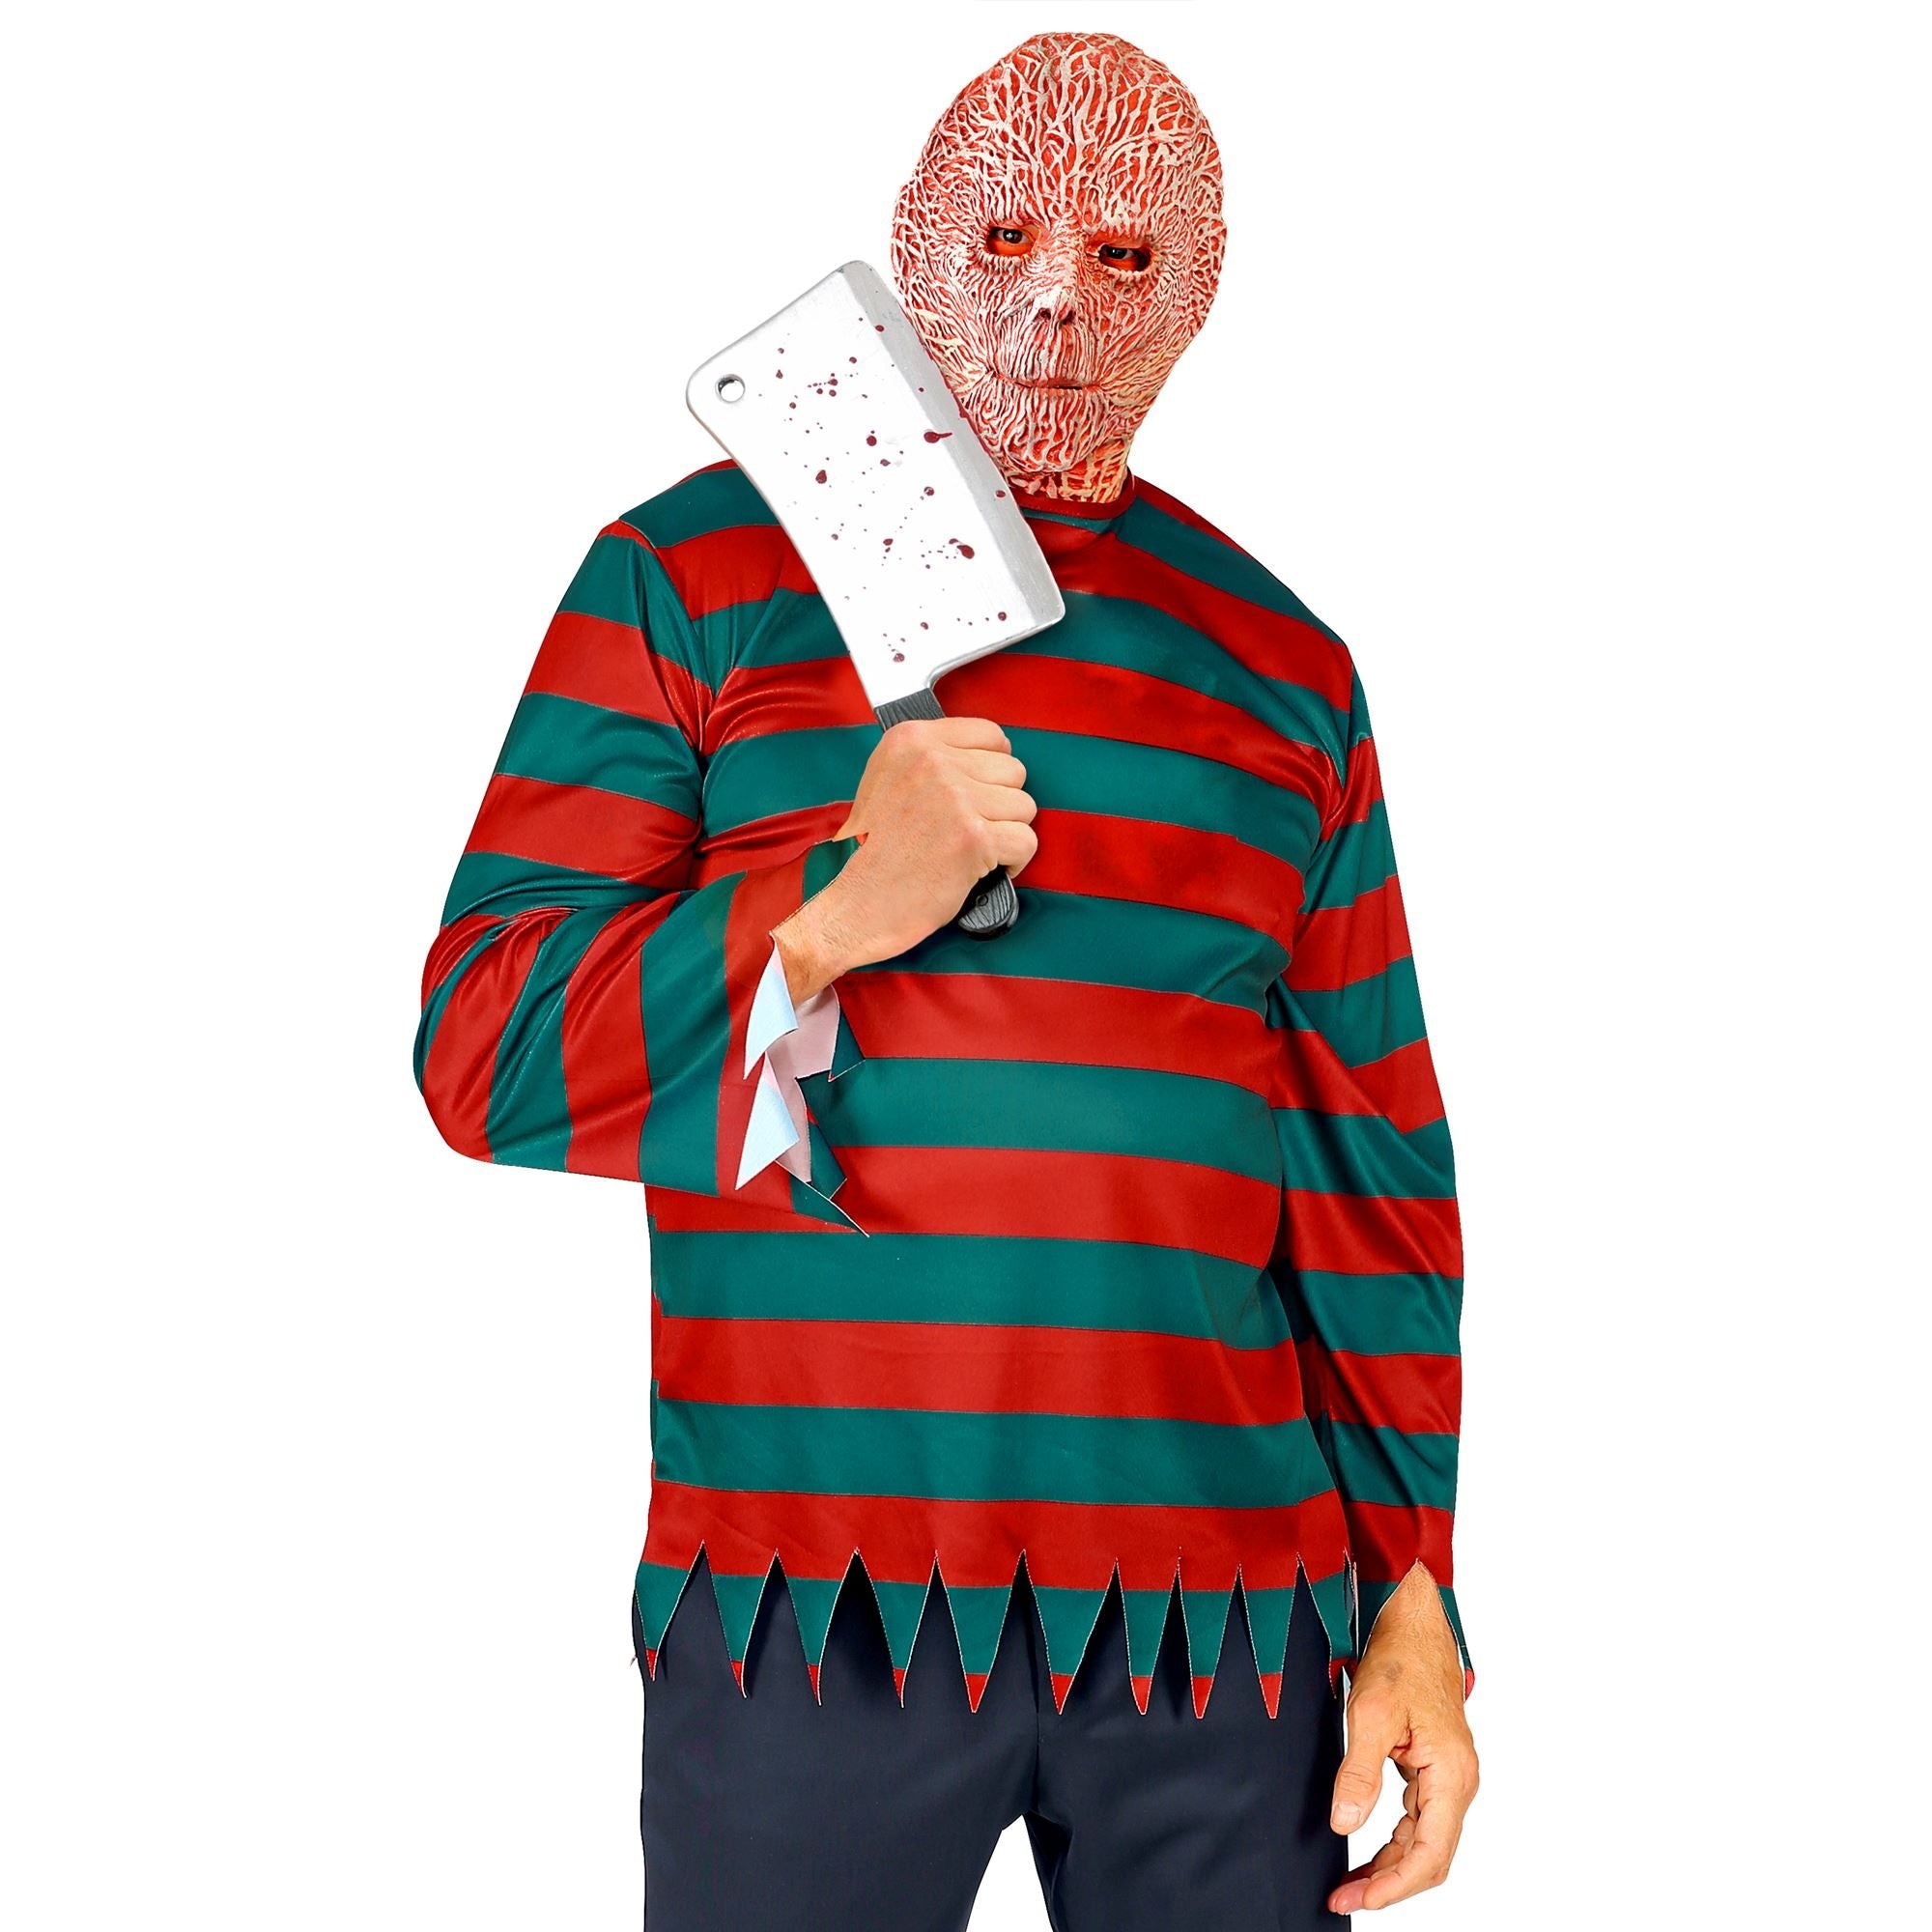 Widmann - Horror Films Kostuum - Gruwelijke Nachtmerrie Freddy Krueger Moordenaar Man - rood,groen - XXL - Halloween - Verkleedkleding